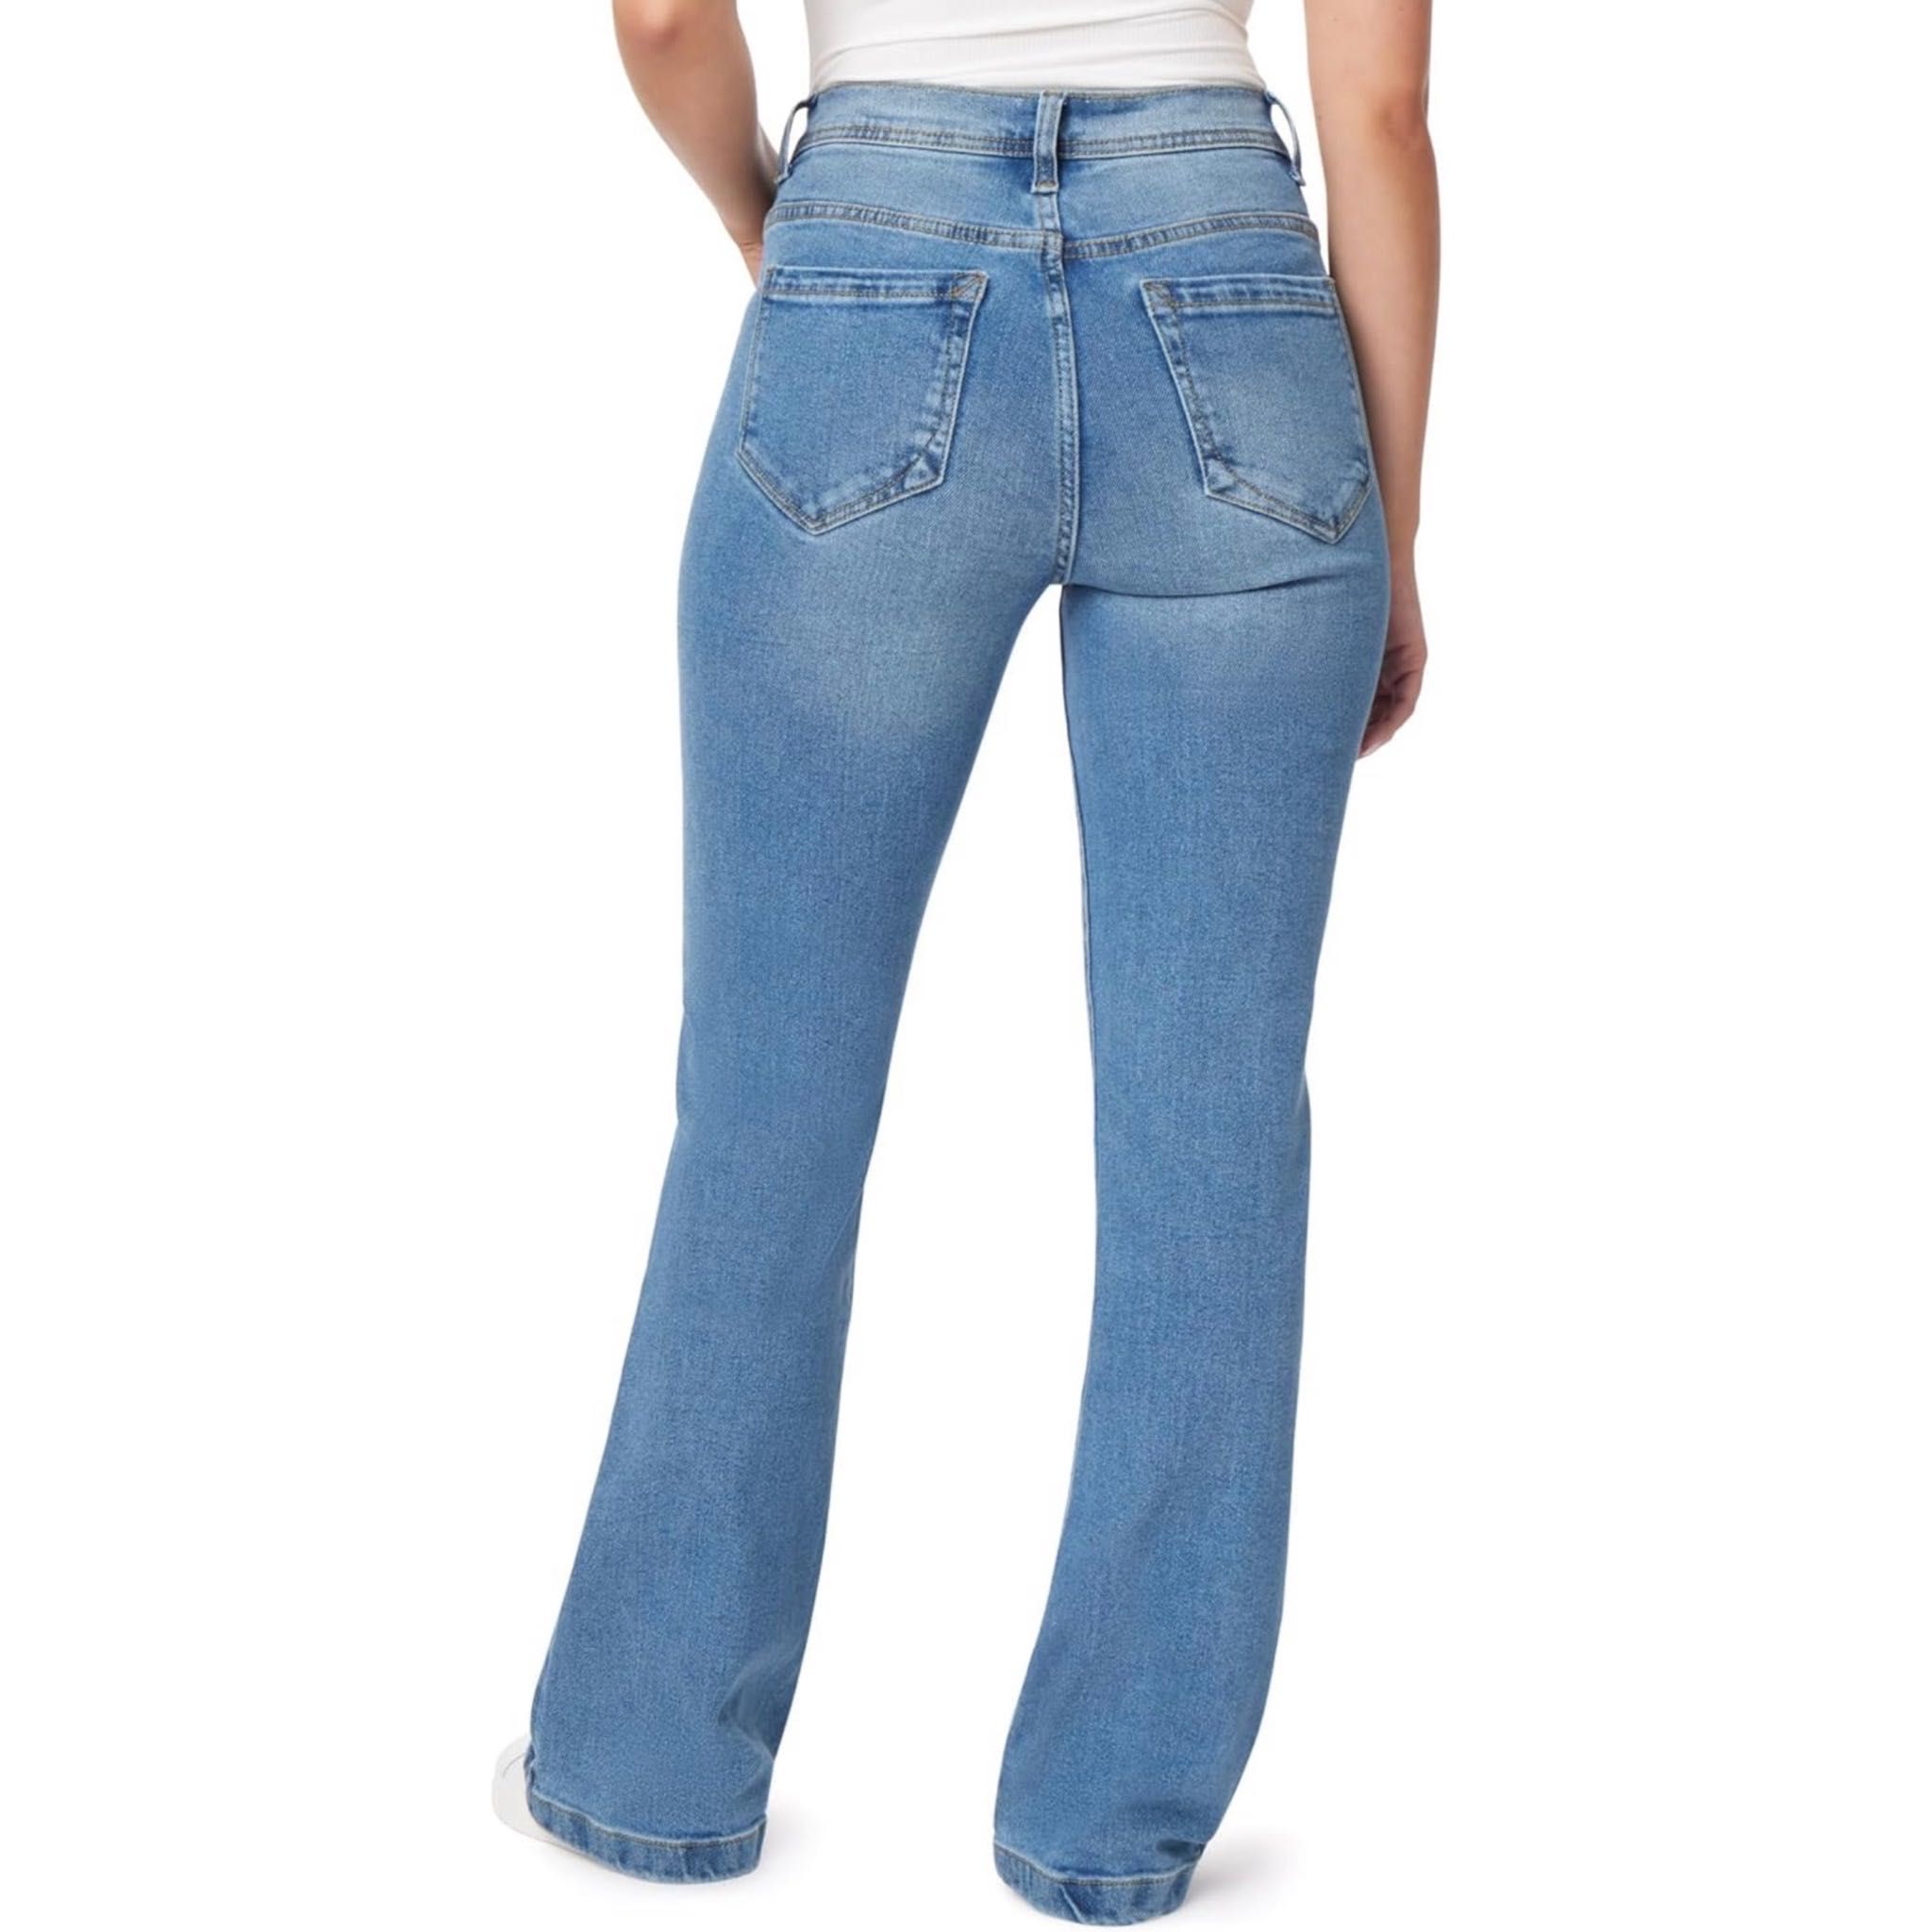 Женские брюки джинсы клеш Kensie Jeans Vintage Luxe L размер 12/31 США